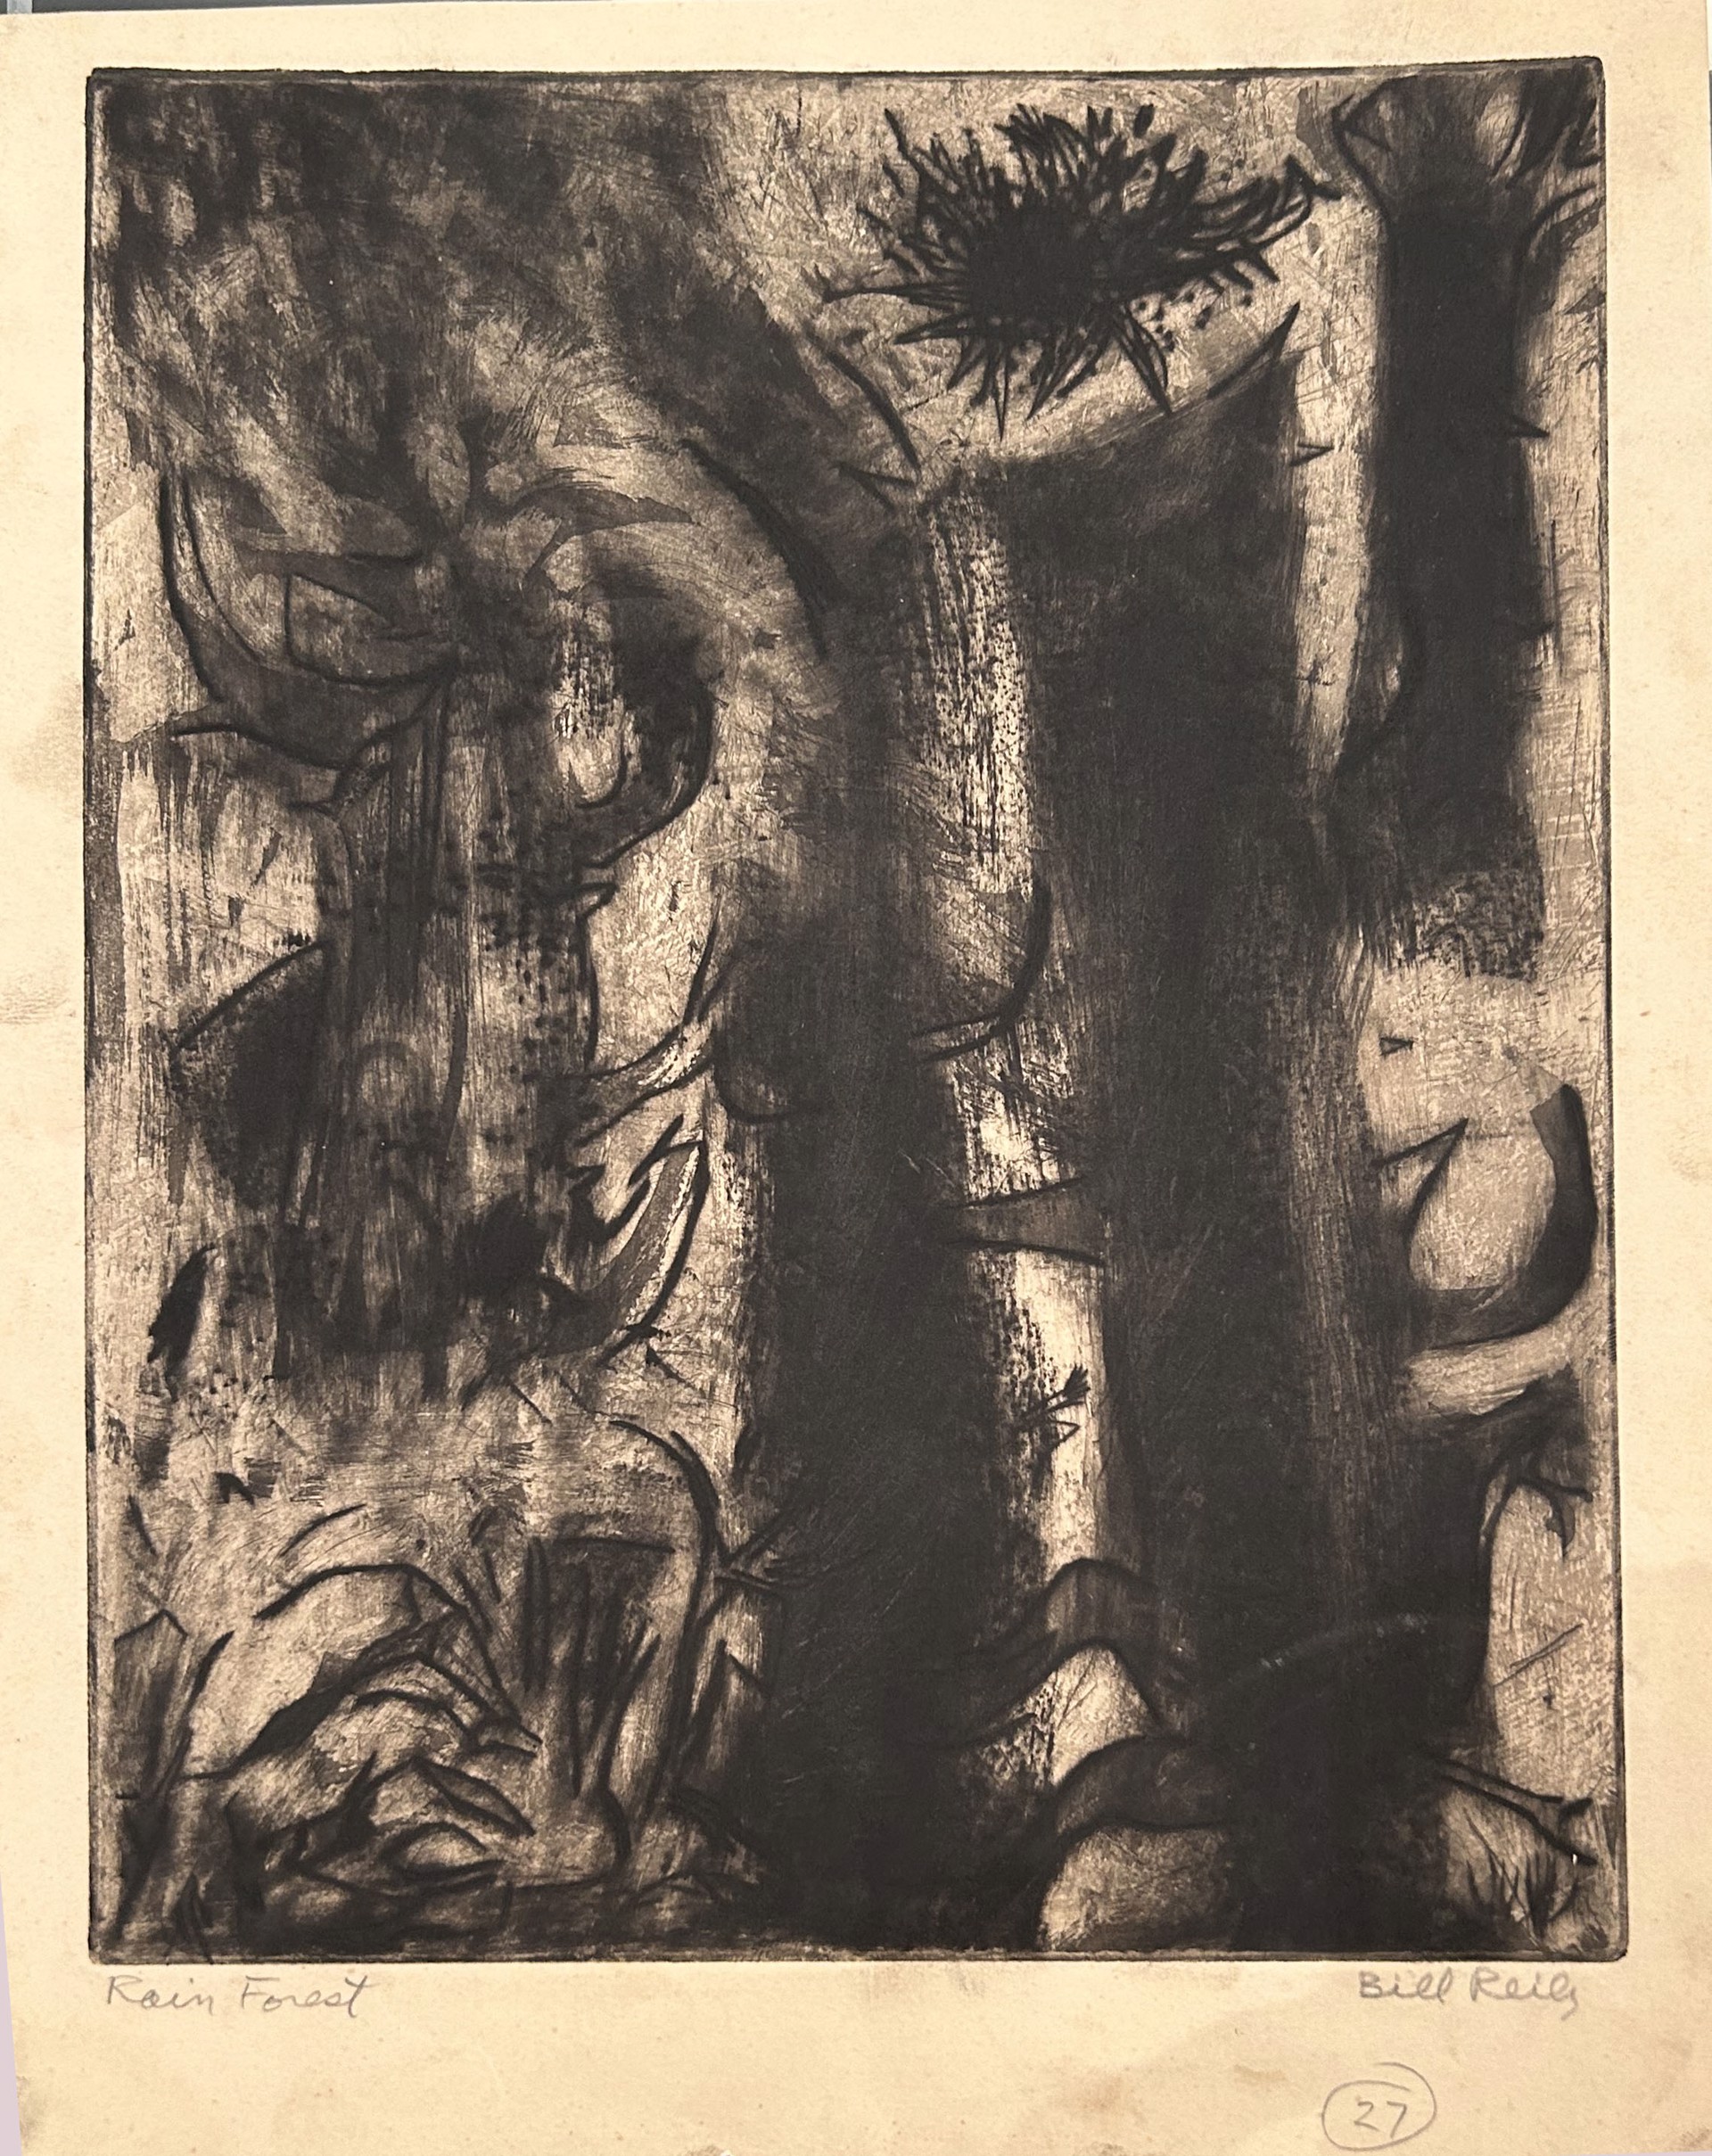 27e. Rain Forest by Bill Reily Prints